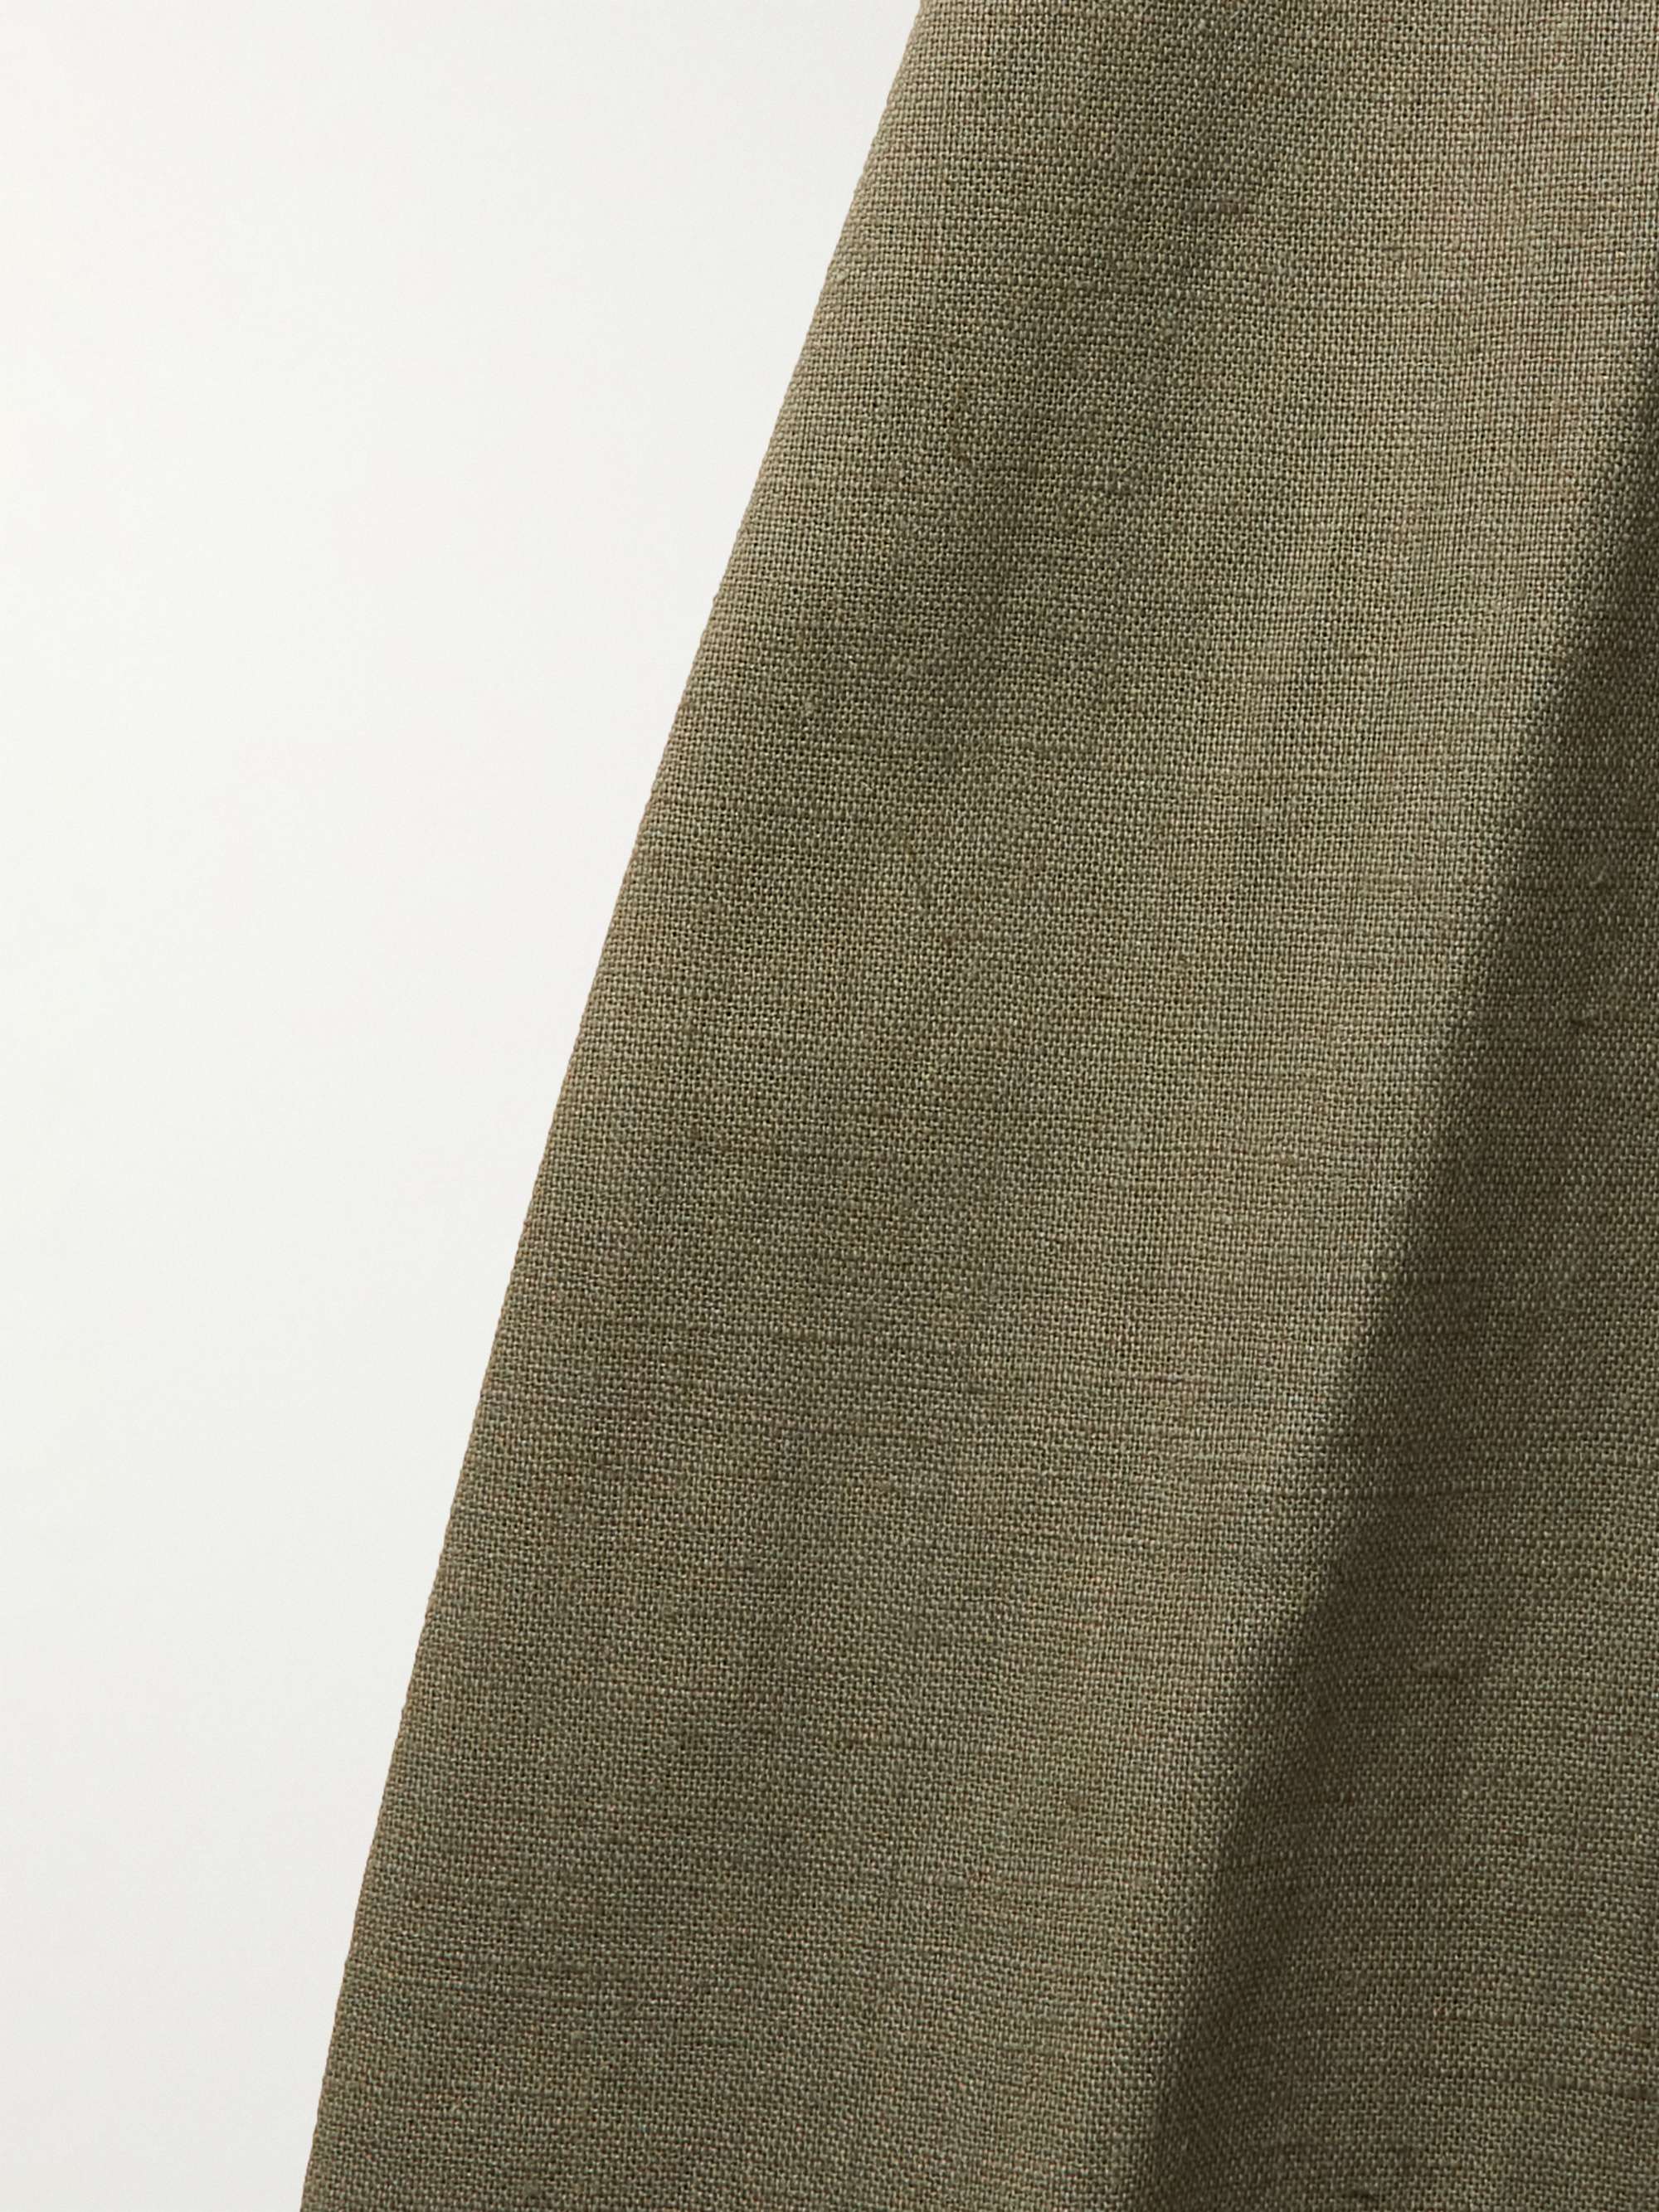 A KIND OF GUISE Shinji Cotton and Linen-Blend Blazer